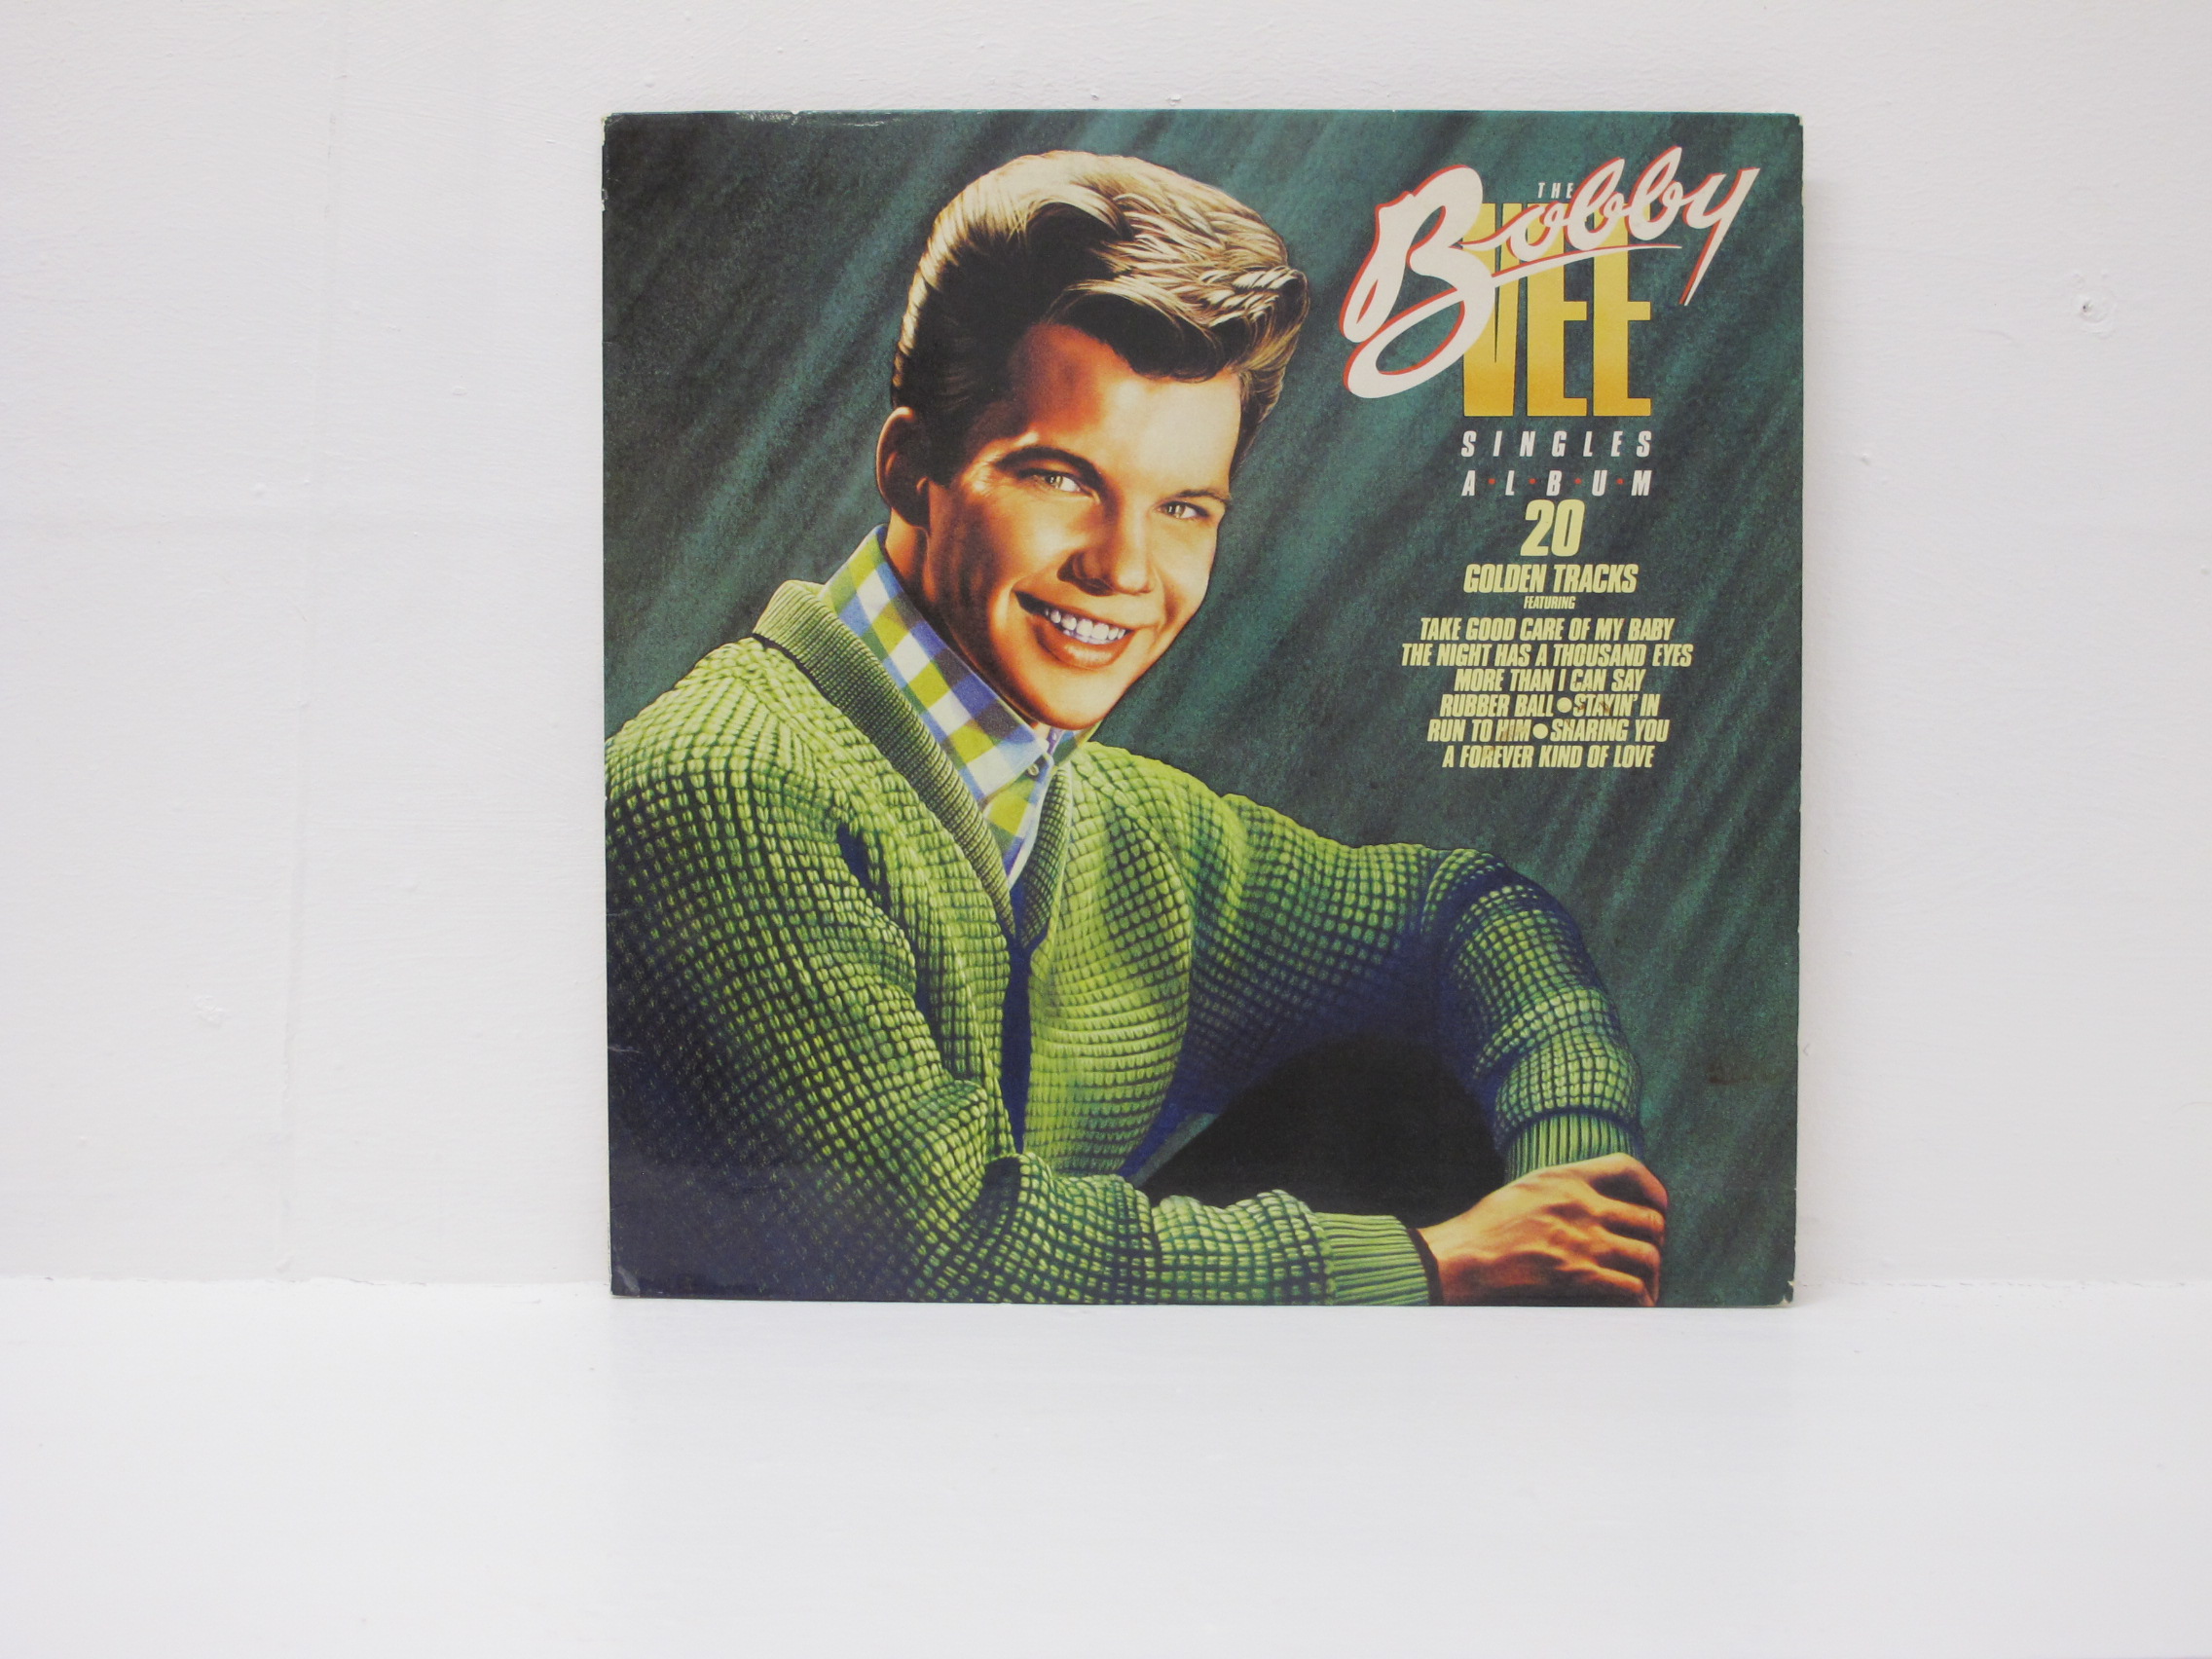 Bobby Vee - Singles Album